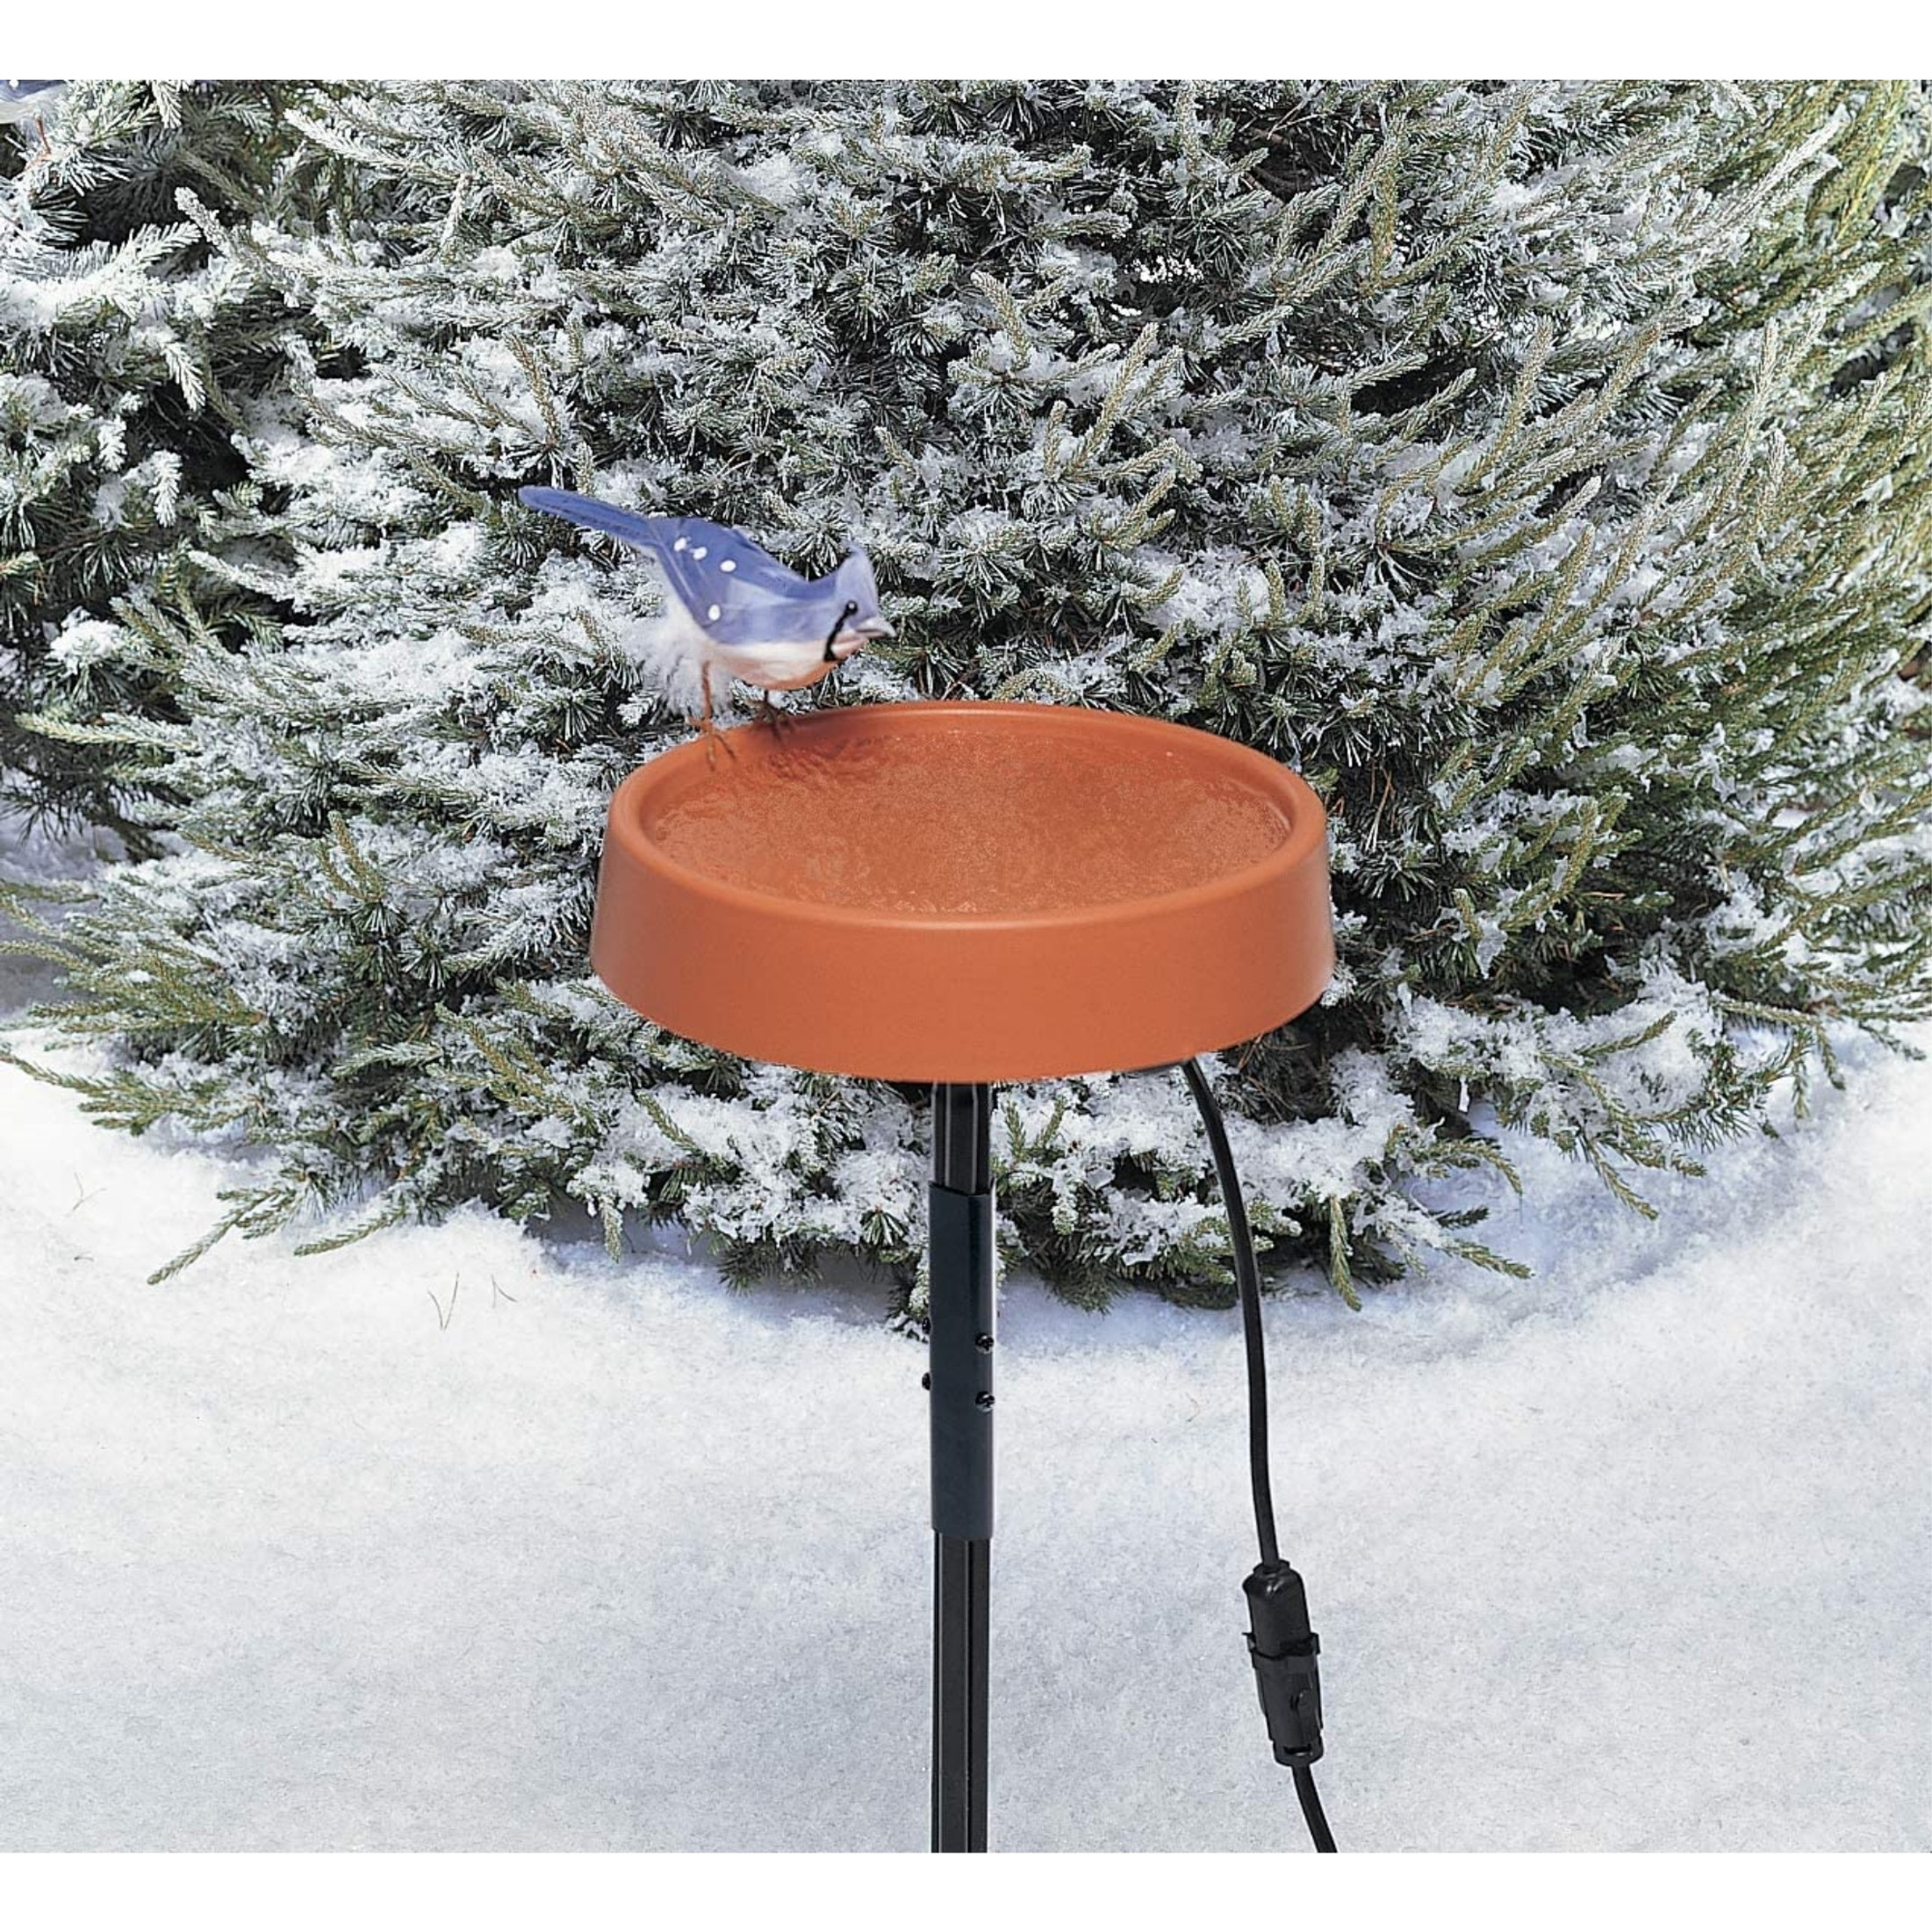 API Heated Bird Bath with Stand, 12" Diameter